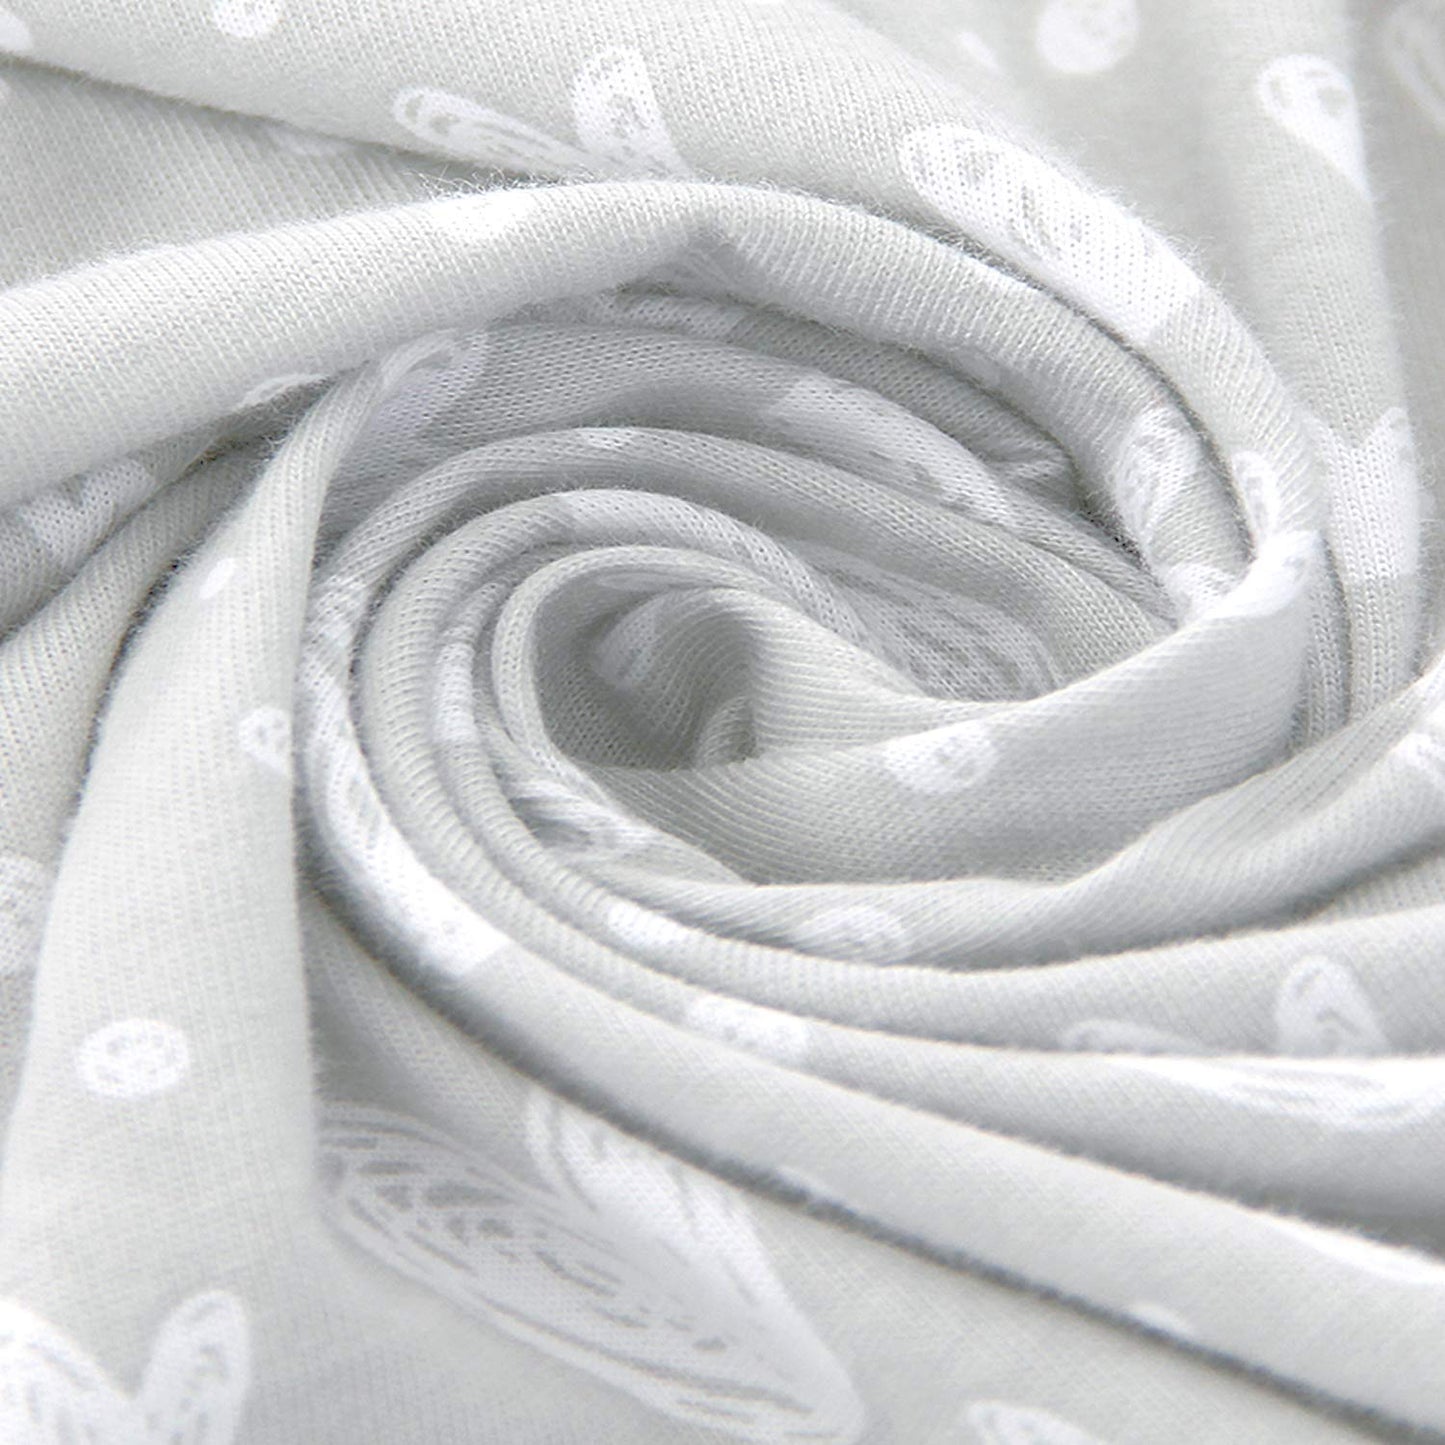 Shop by Size - Bassinet Sheet, 2 Pack, 100% Jersey Cotton